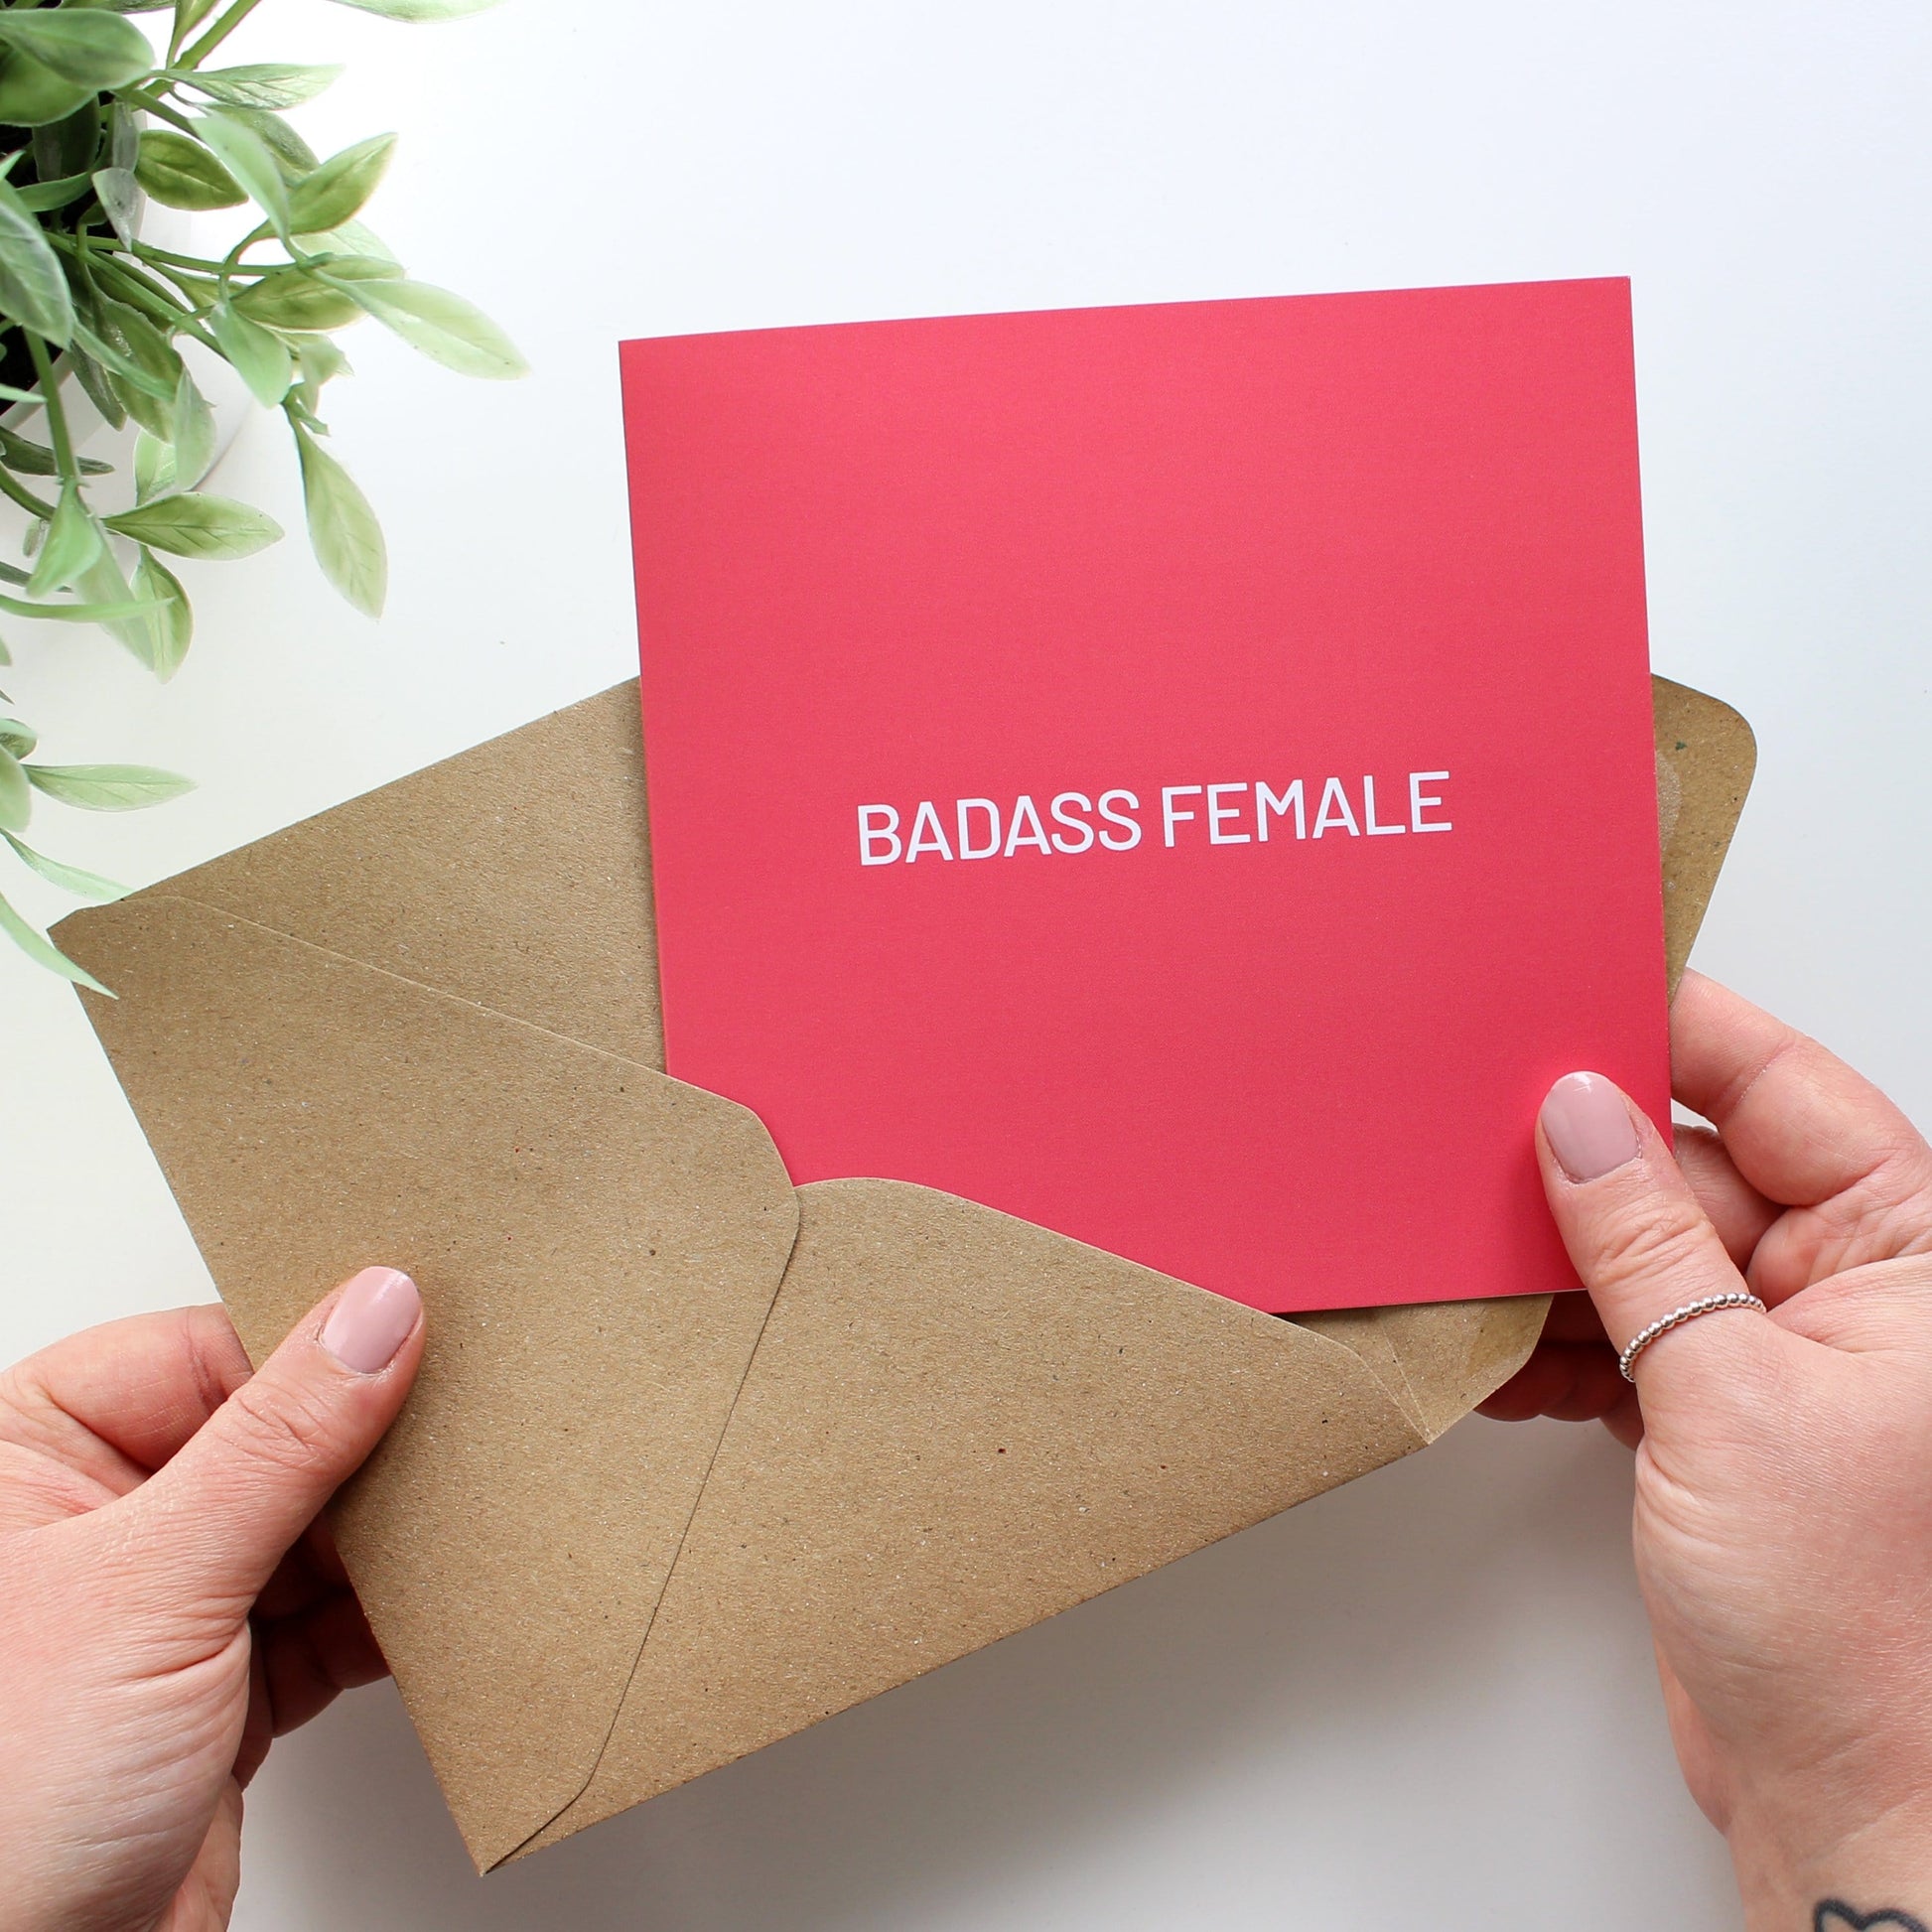 Badass female greeting card from Purple Tree Designs